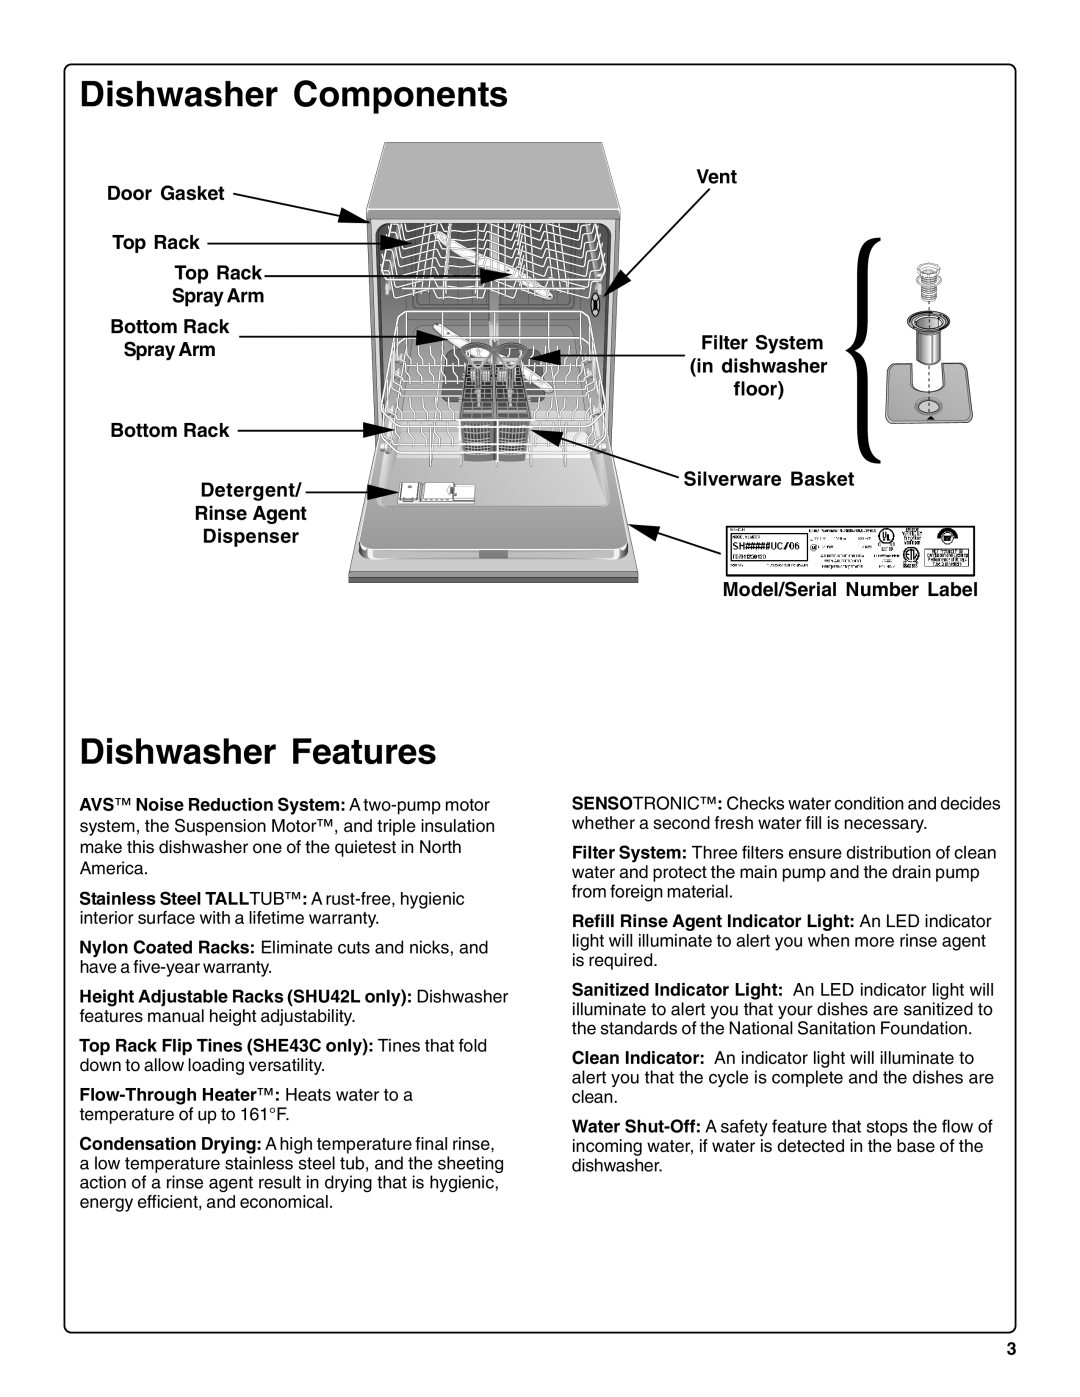 Bosch Appliances sHe43C Dishwasher Components, Dishwasher Features, Bottom Rack Detergent Rinse Agent Dispenser 